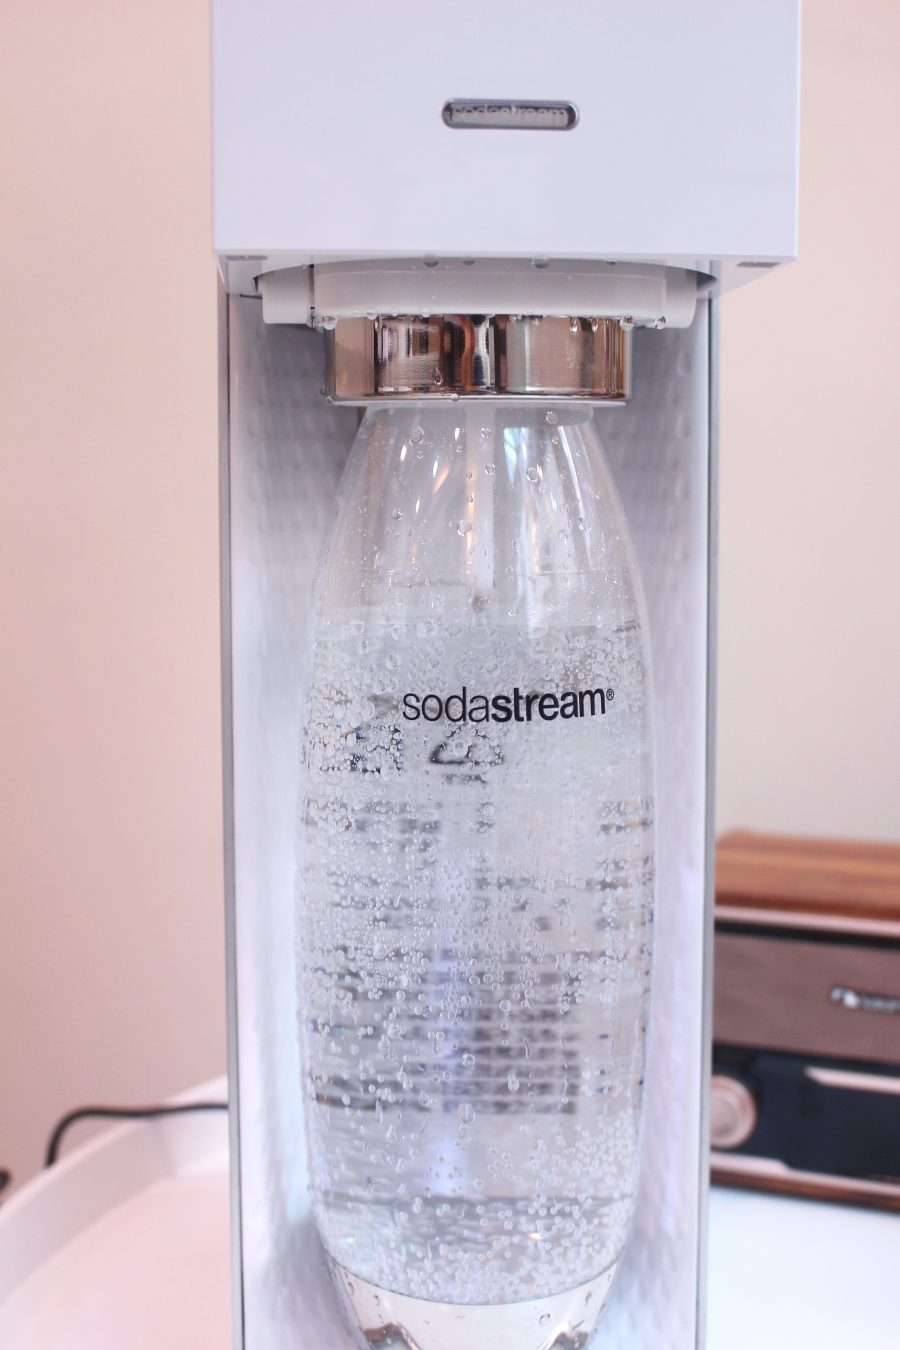 sodastream氣泡水機團購 power source氣泡水機氣泡細緻度